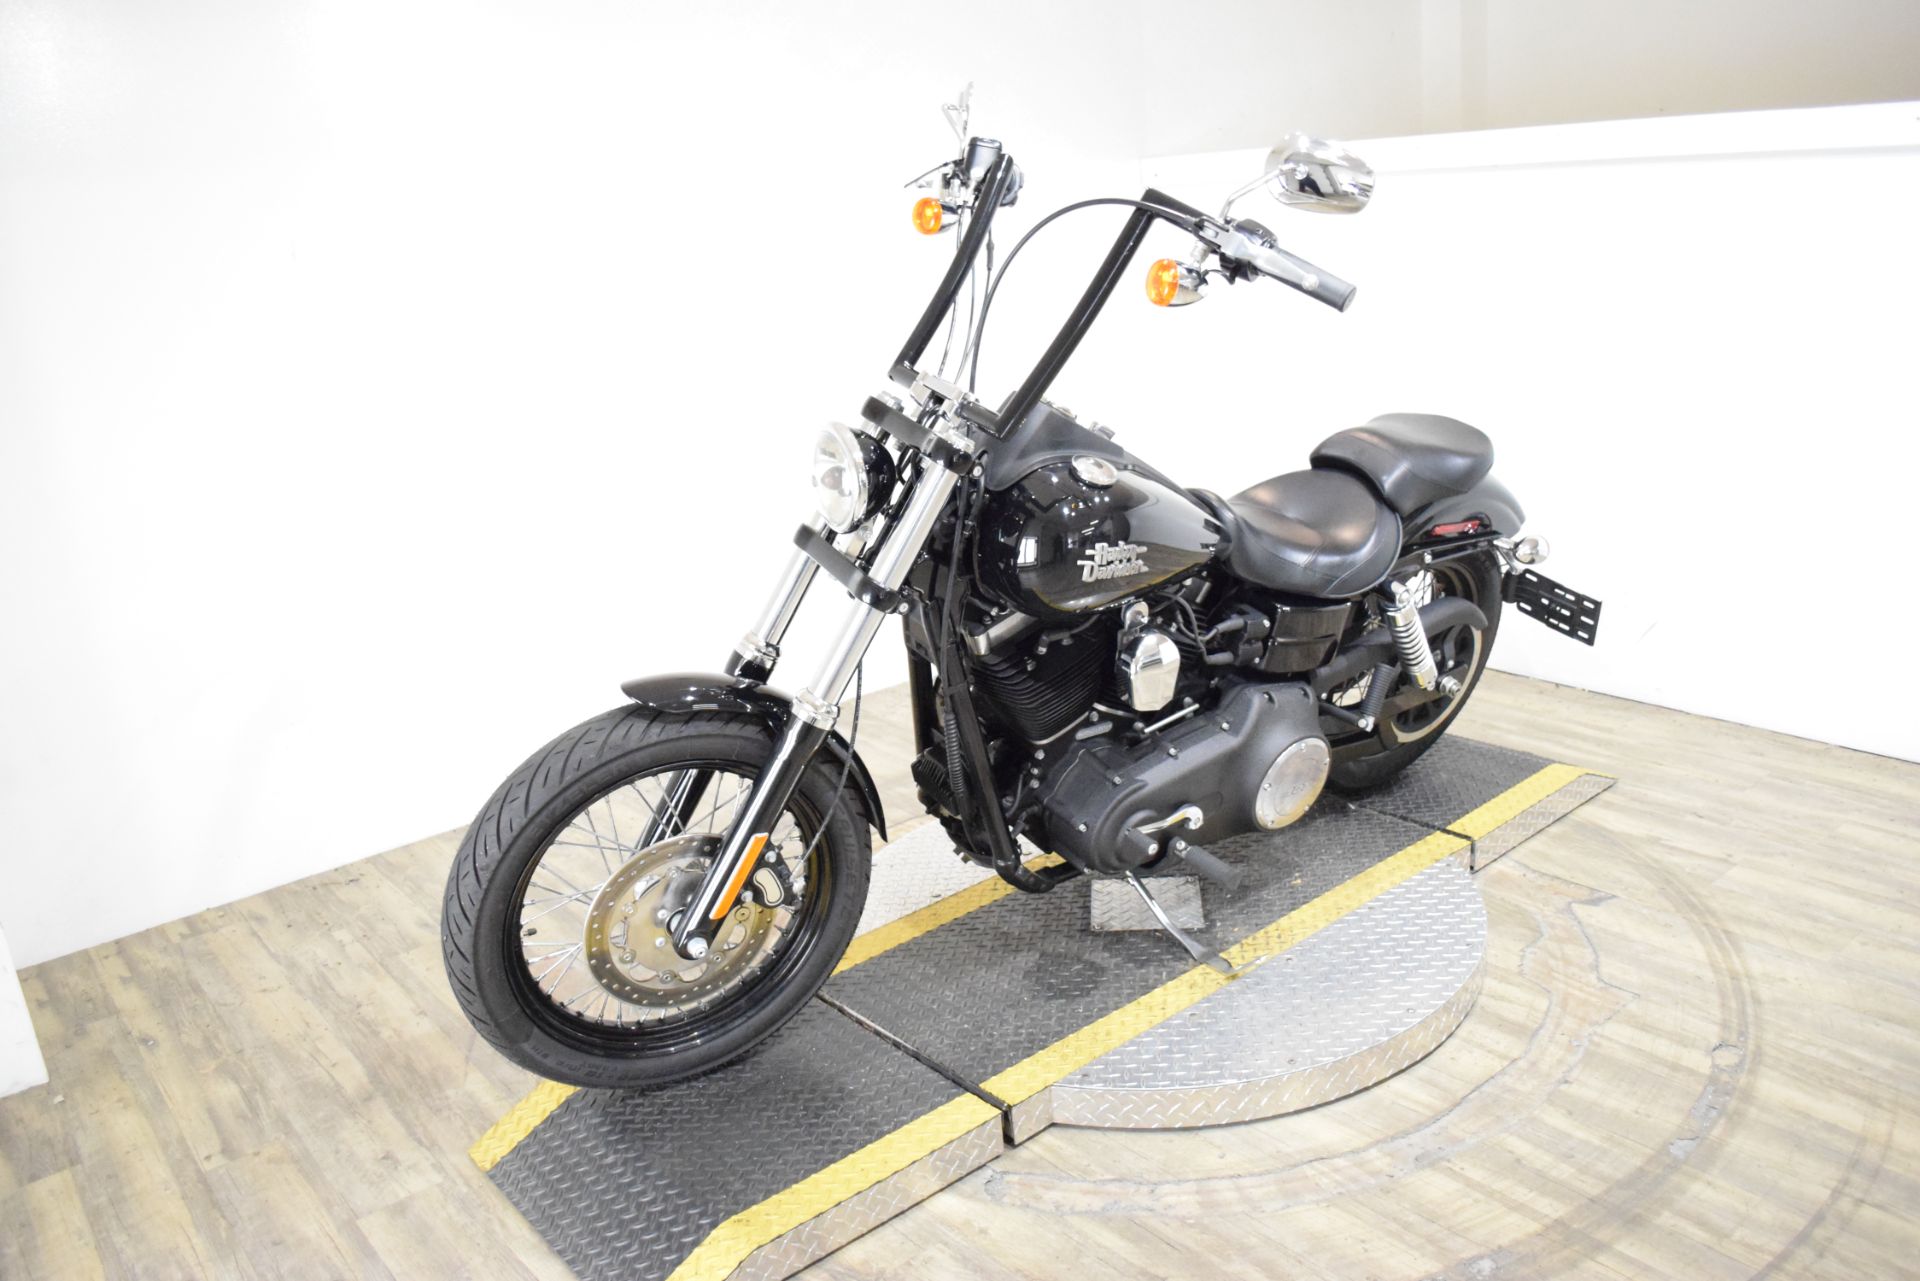 2016 Harley-Davidson Street Bob® in Wauconda, Illinois - Photo 22